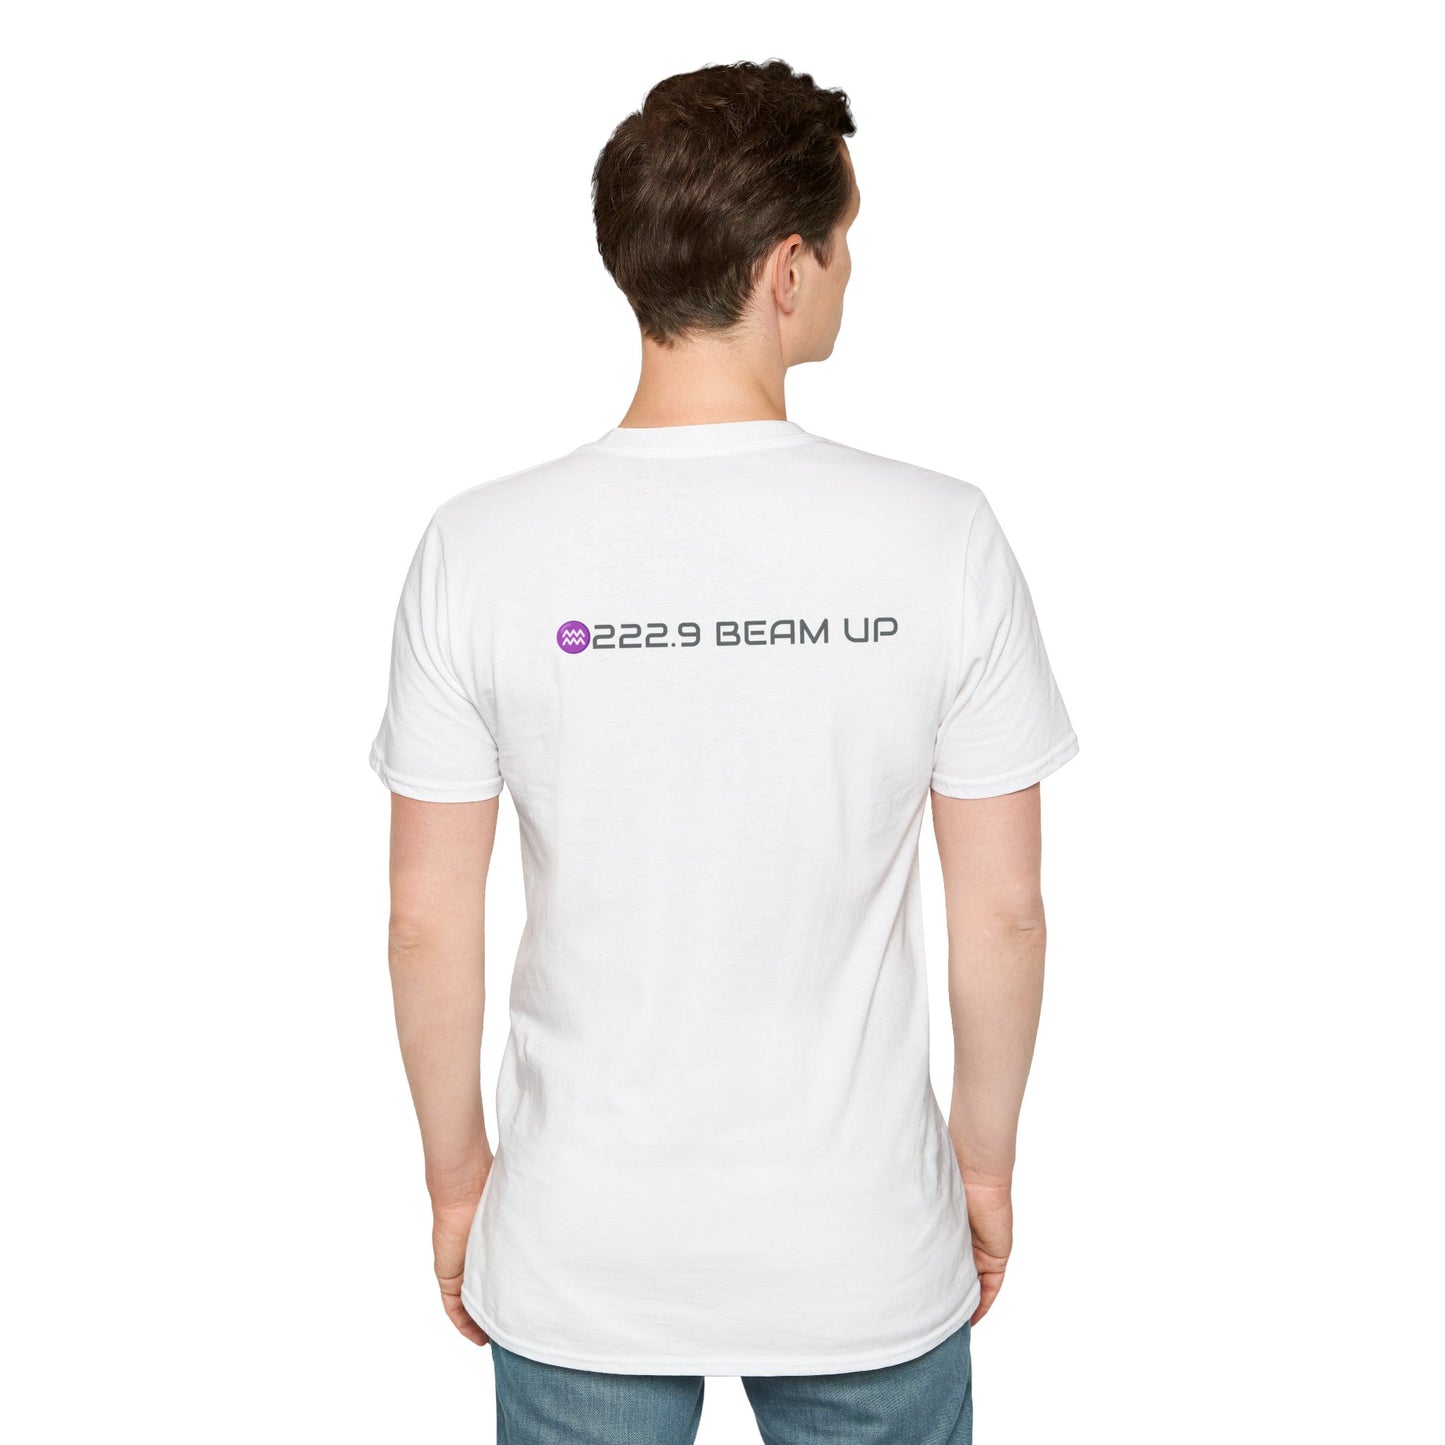 Aquarius Mercury Softstyle T-Shirt